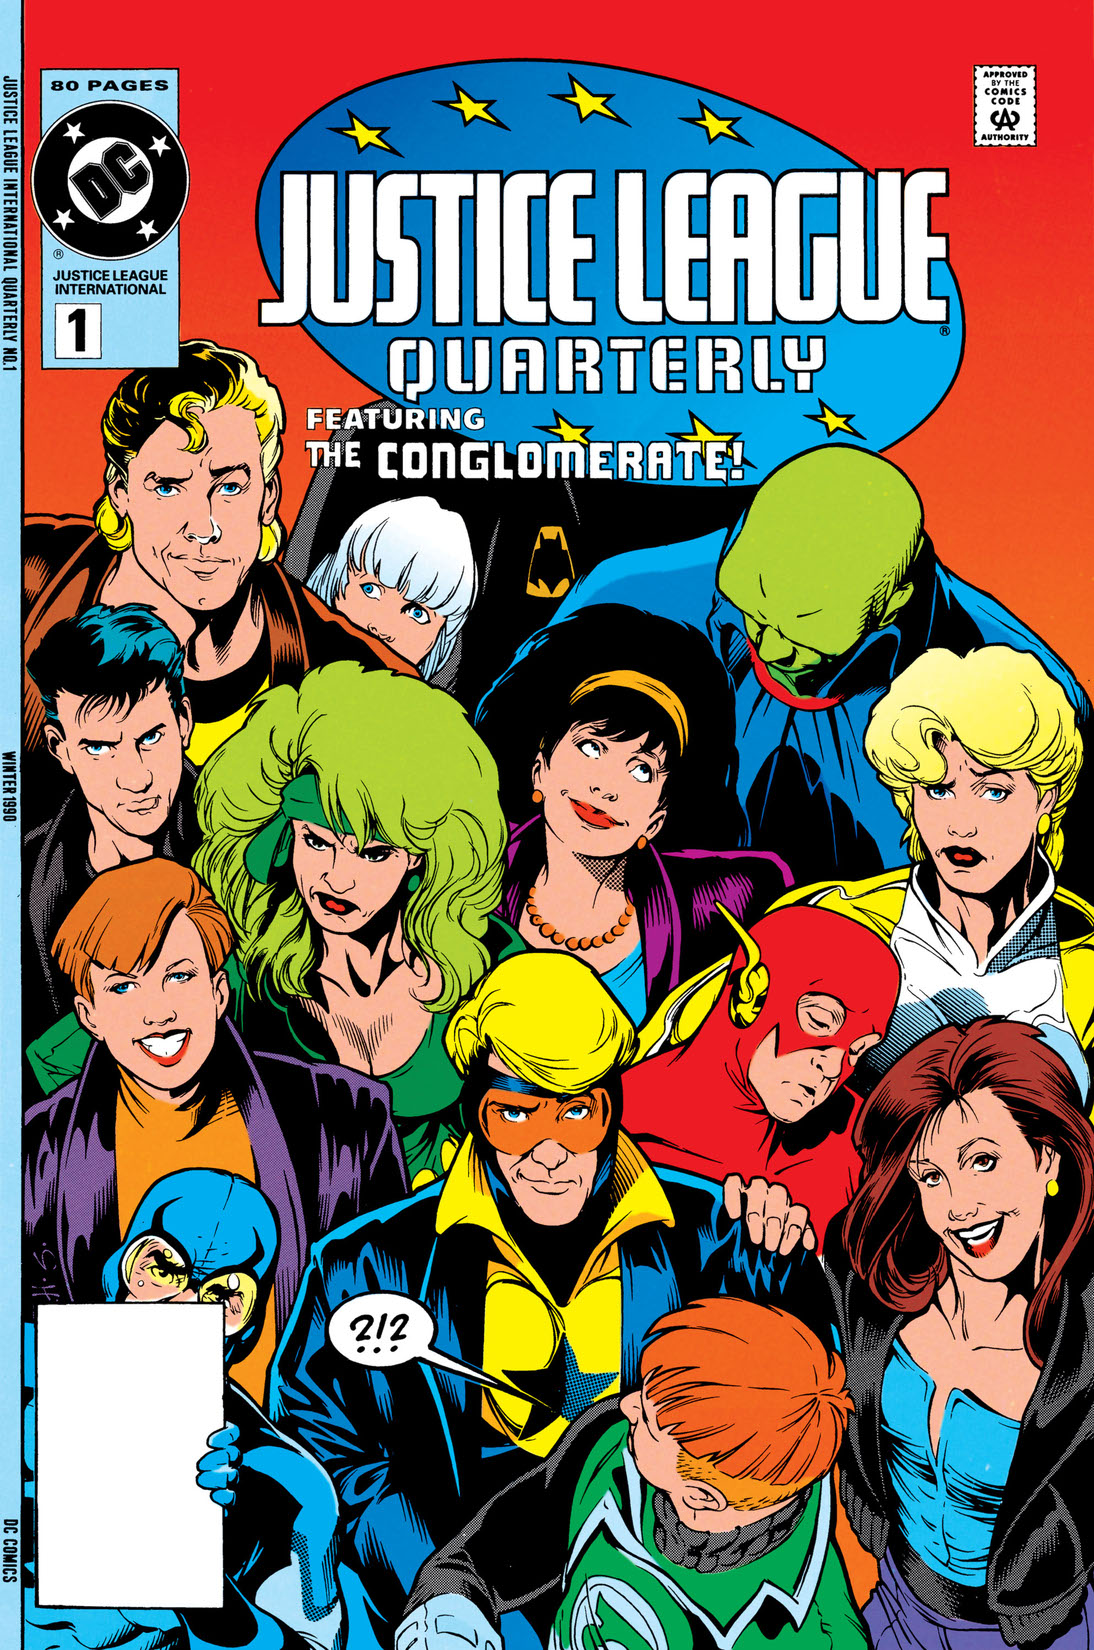 Justice League Quarterly #1 preview images